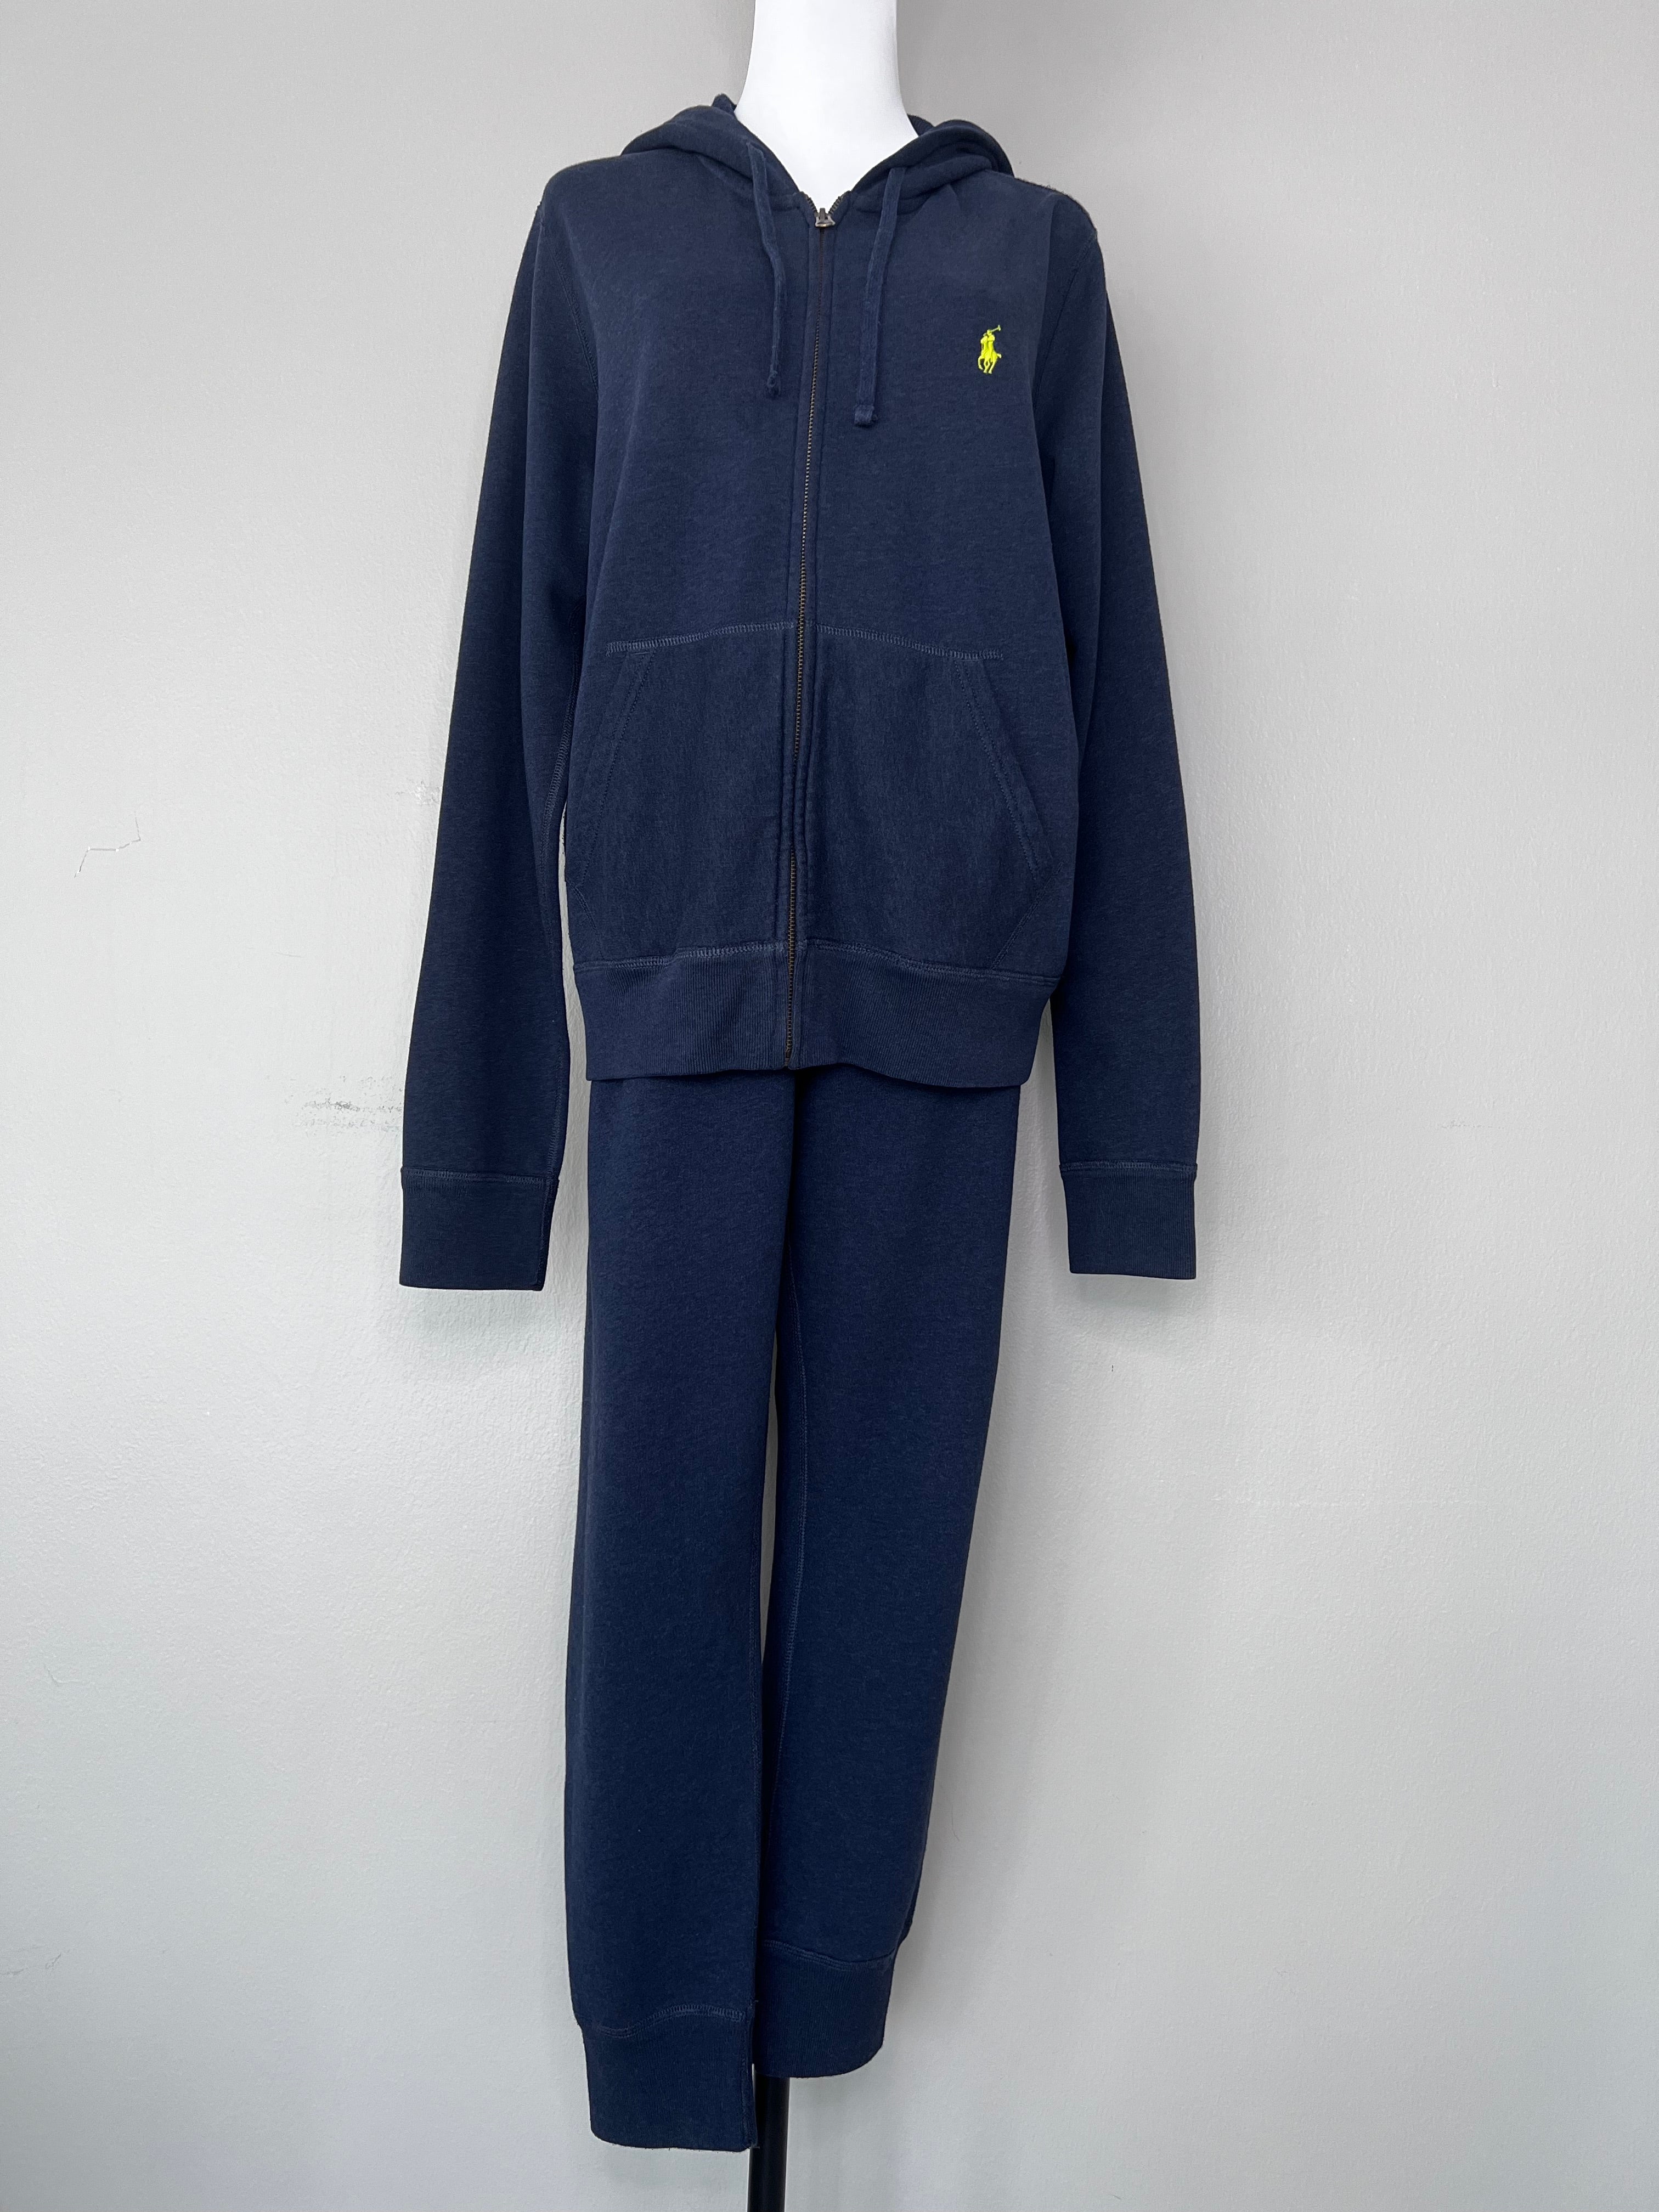 Navy blue comfy jacket & sweats set - POLO